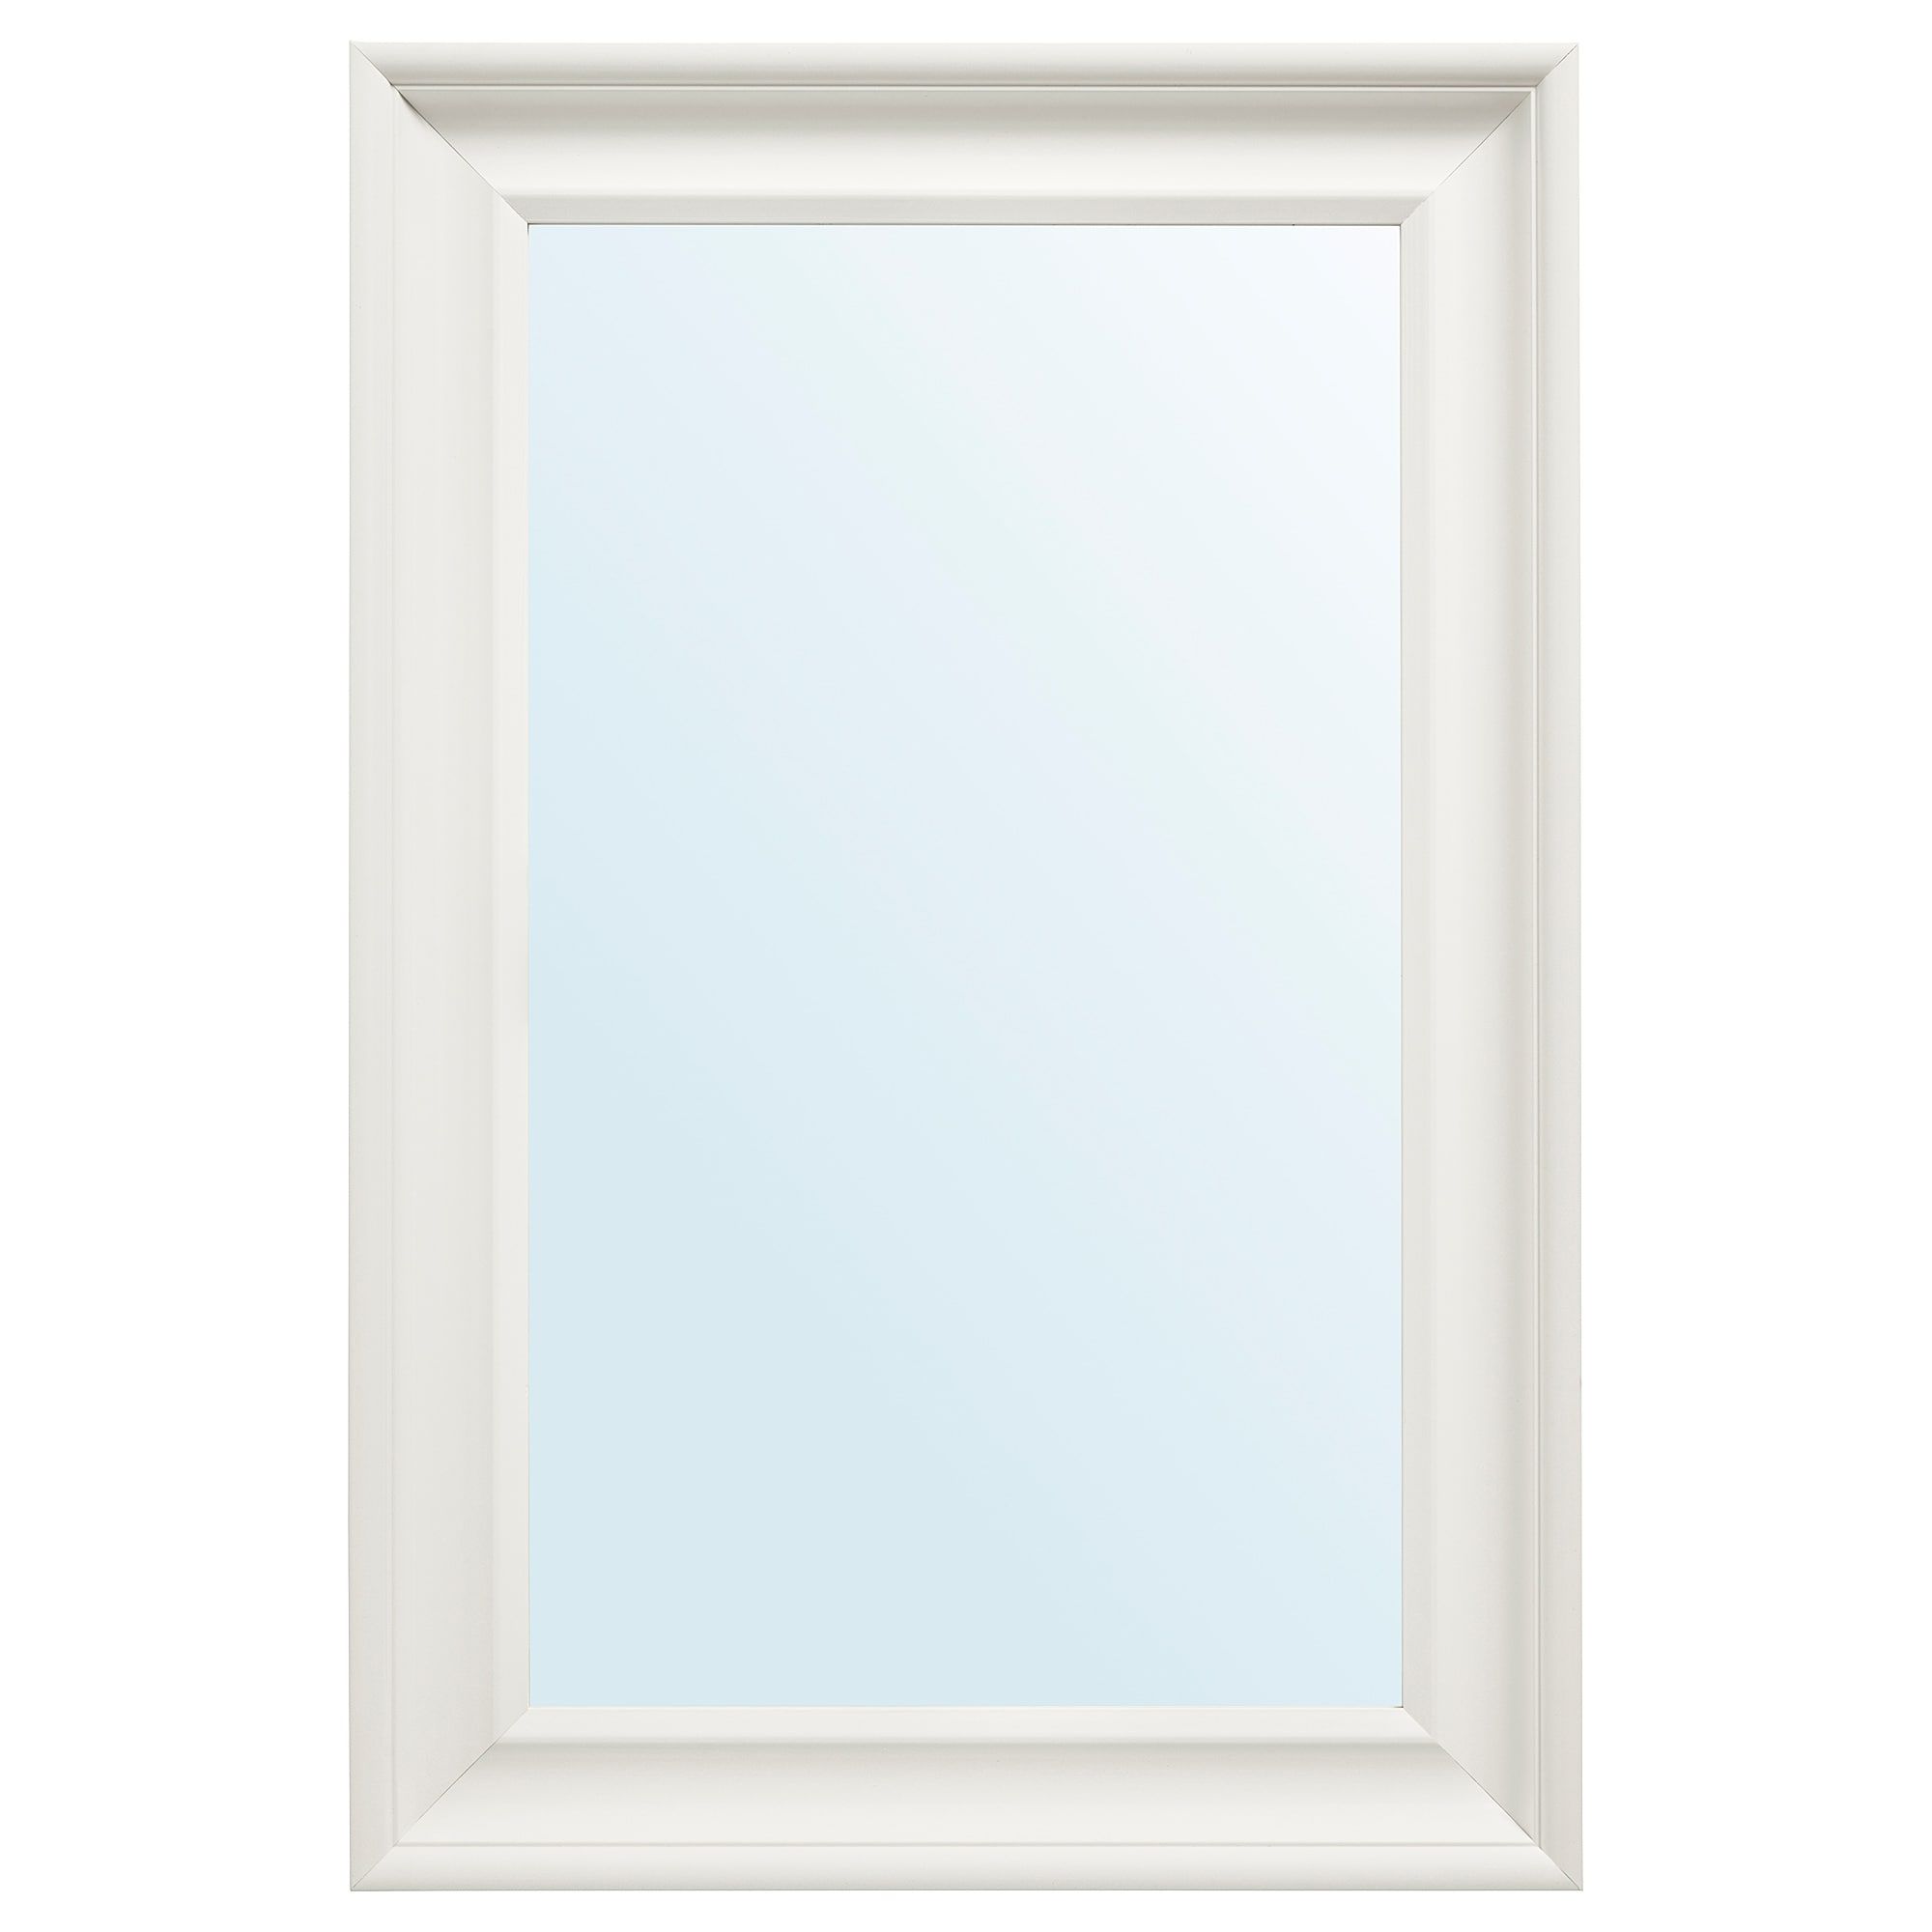 Hemnes – Mirror, White Regarding Recent Ikea Oval Wall Mirrors (View 13 of 20)